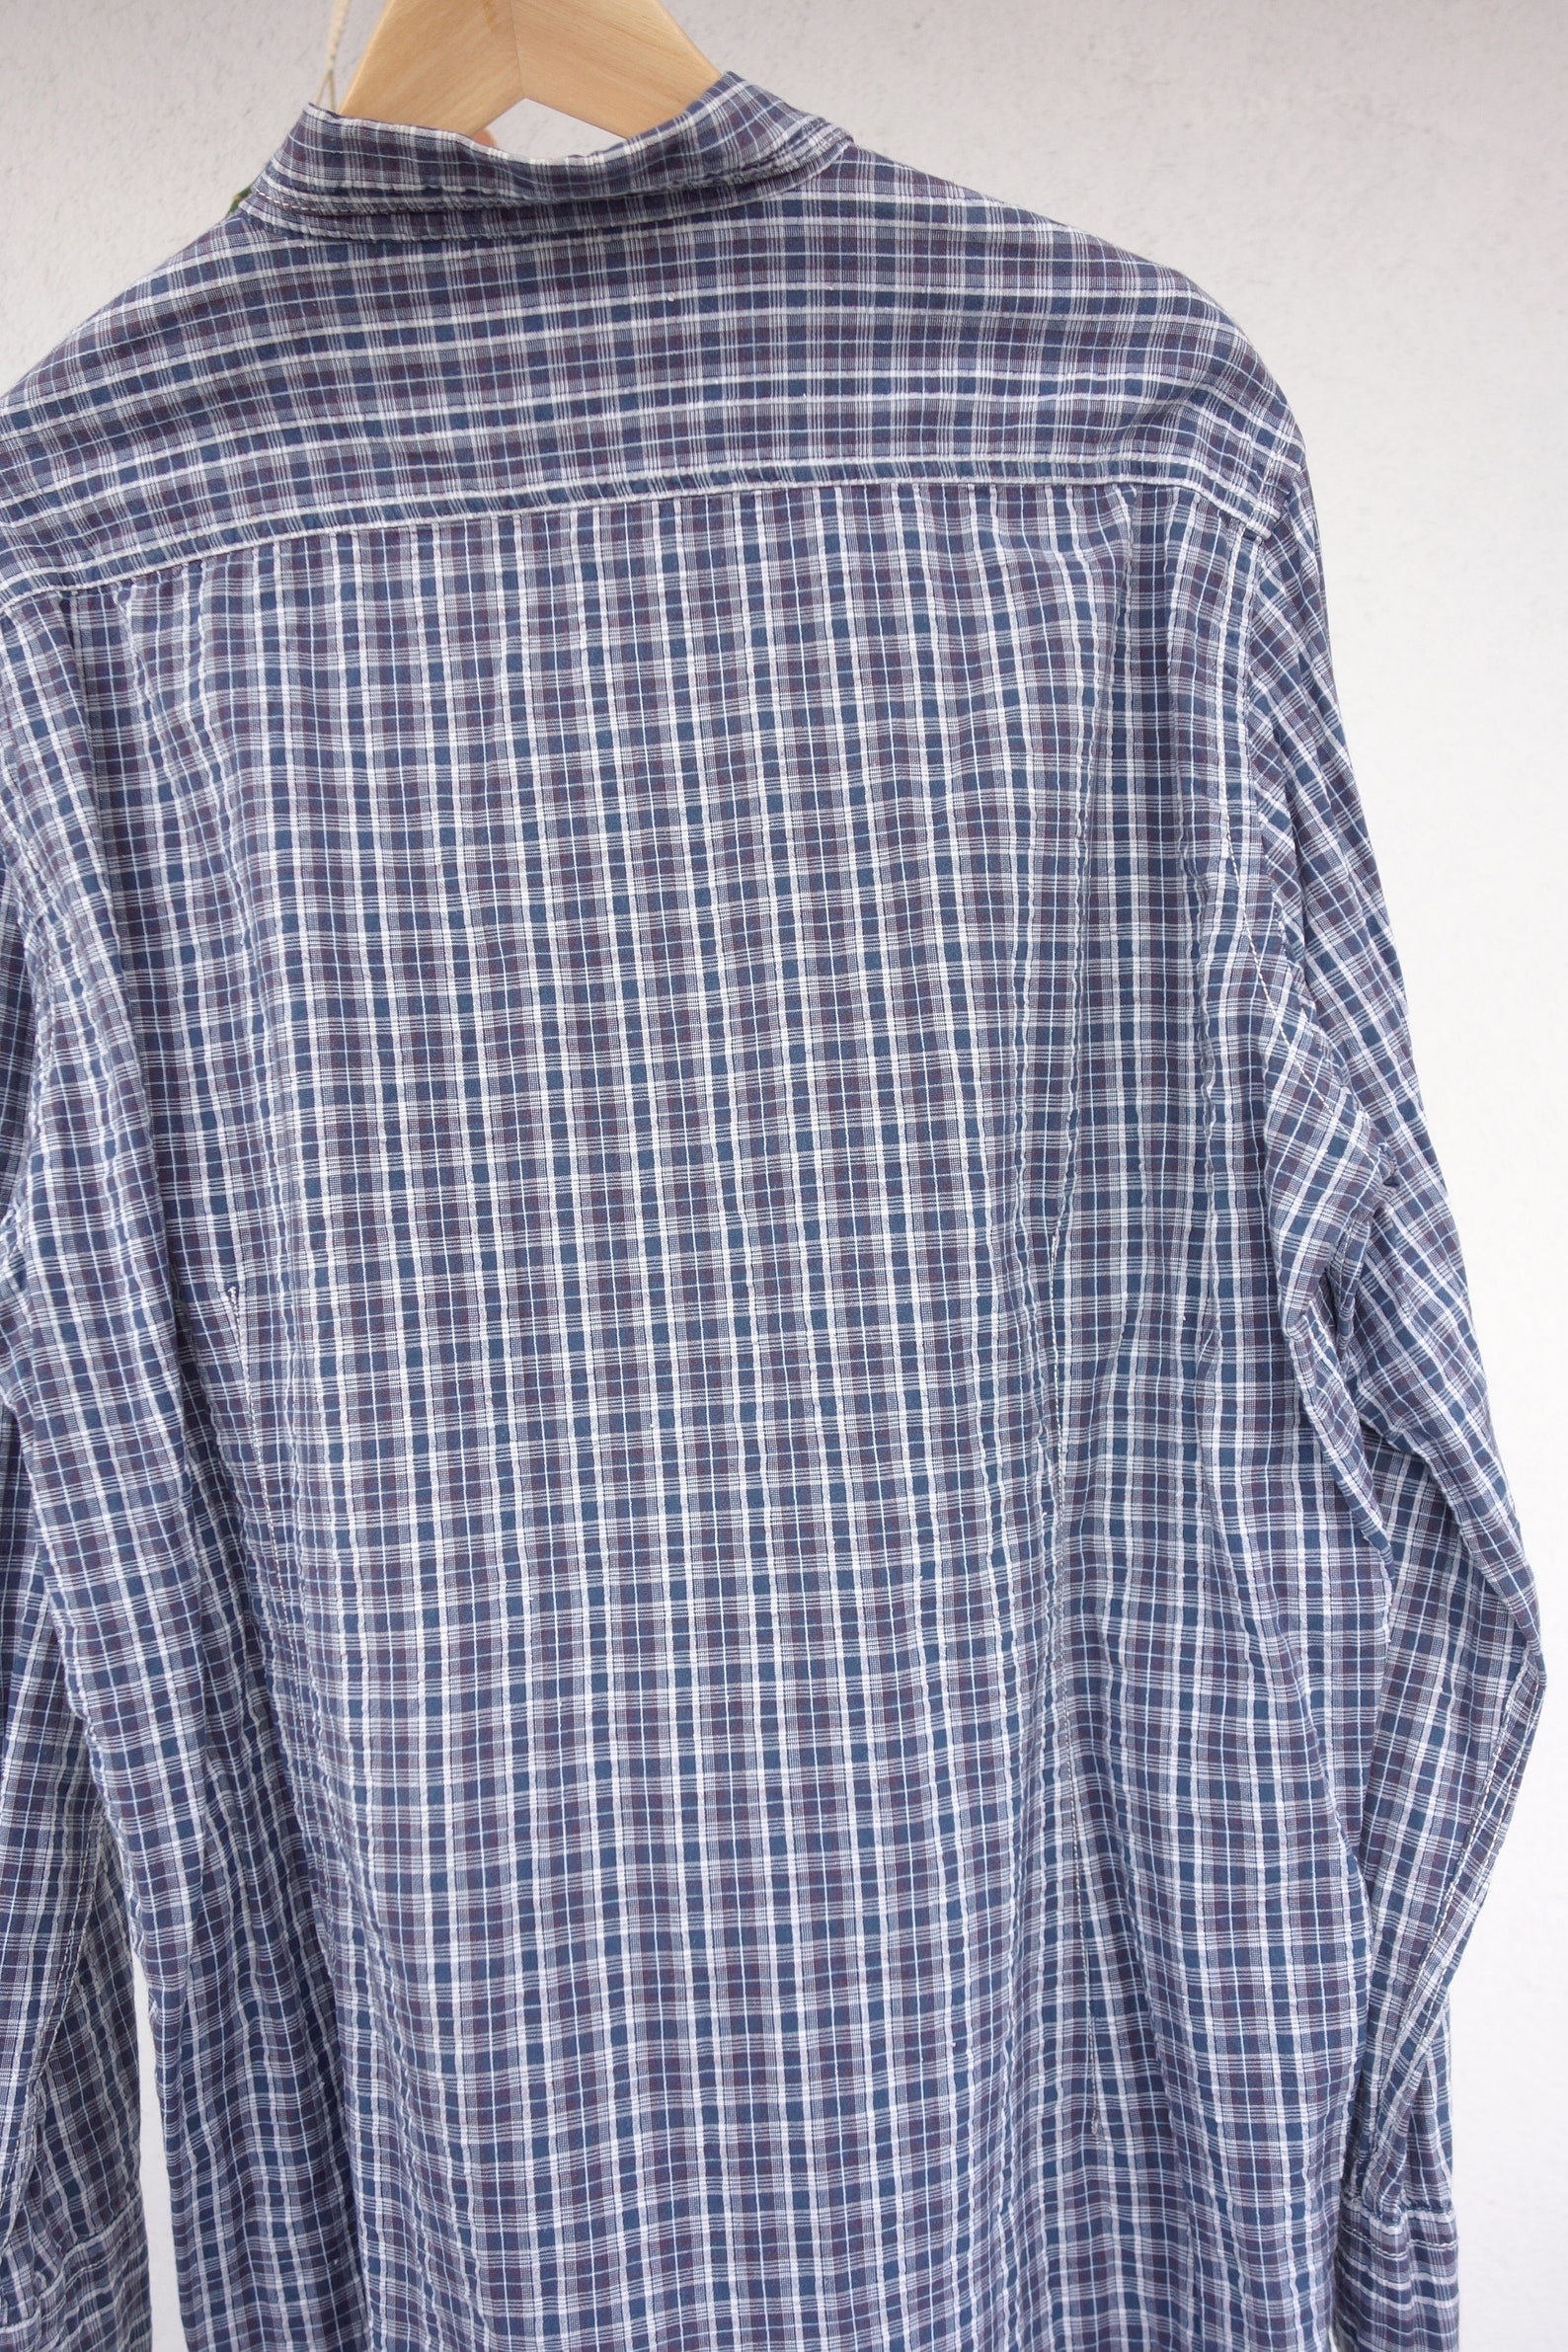 Vintage karo Biaggini longsleeve shirt size XXL cotton shirt | Etsy